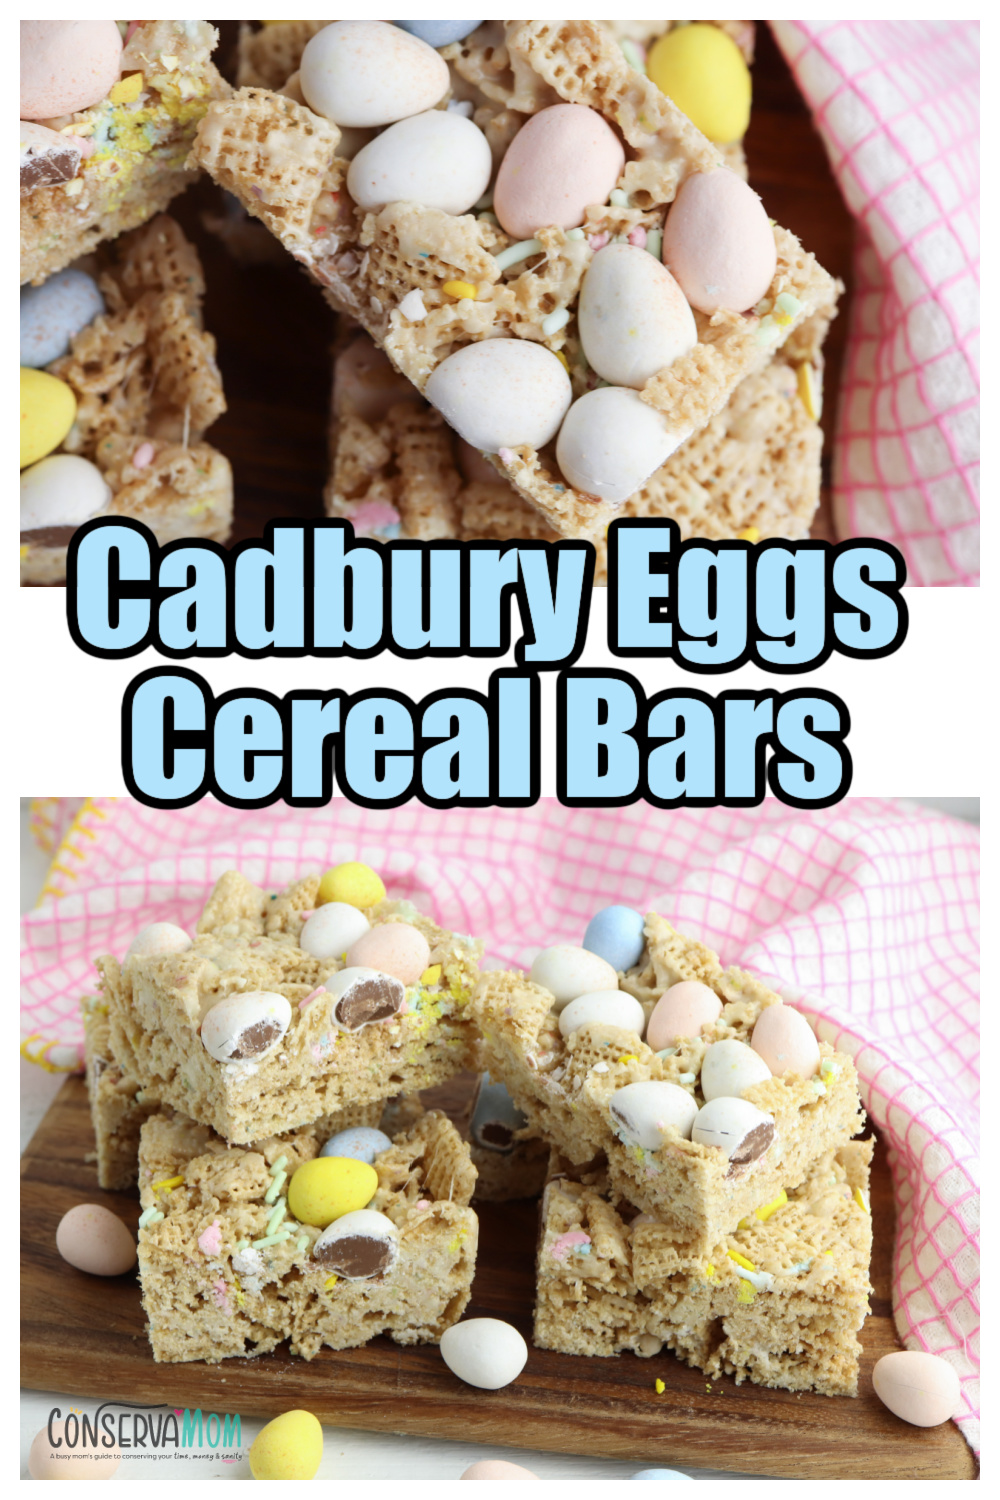 Cadbury Mini Eggs Cereal Bars